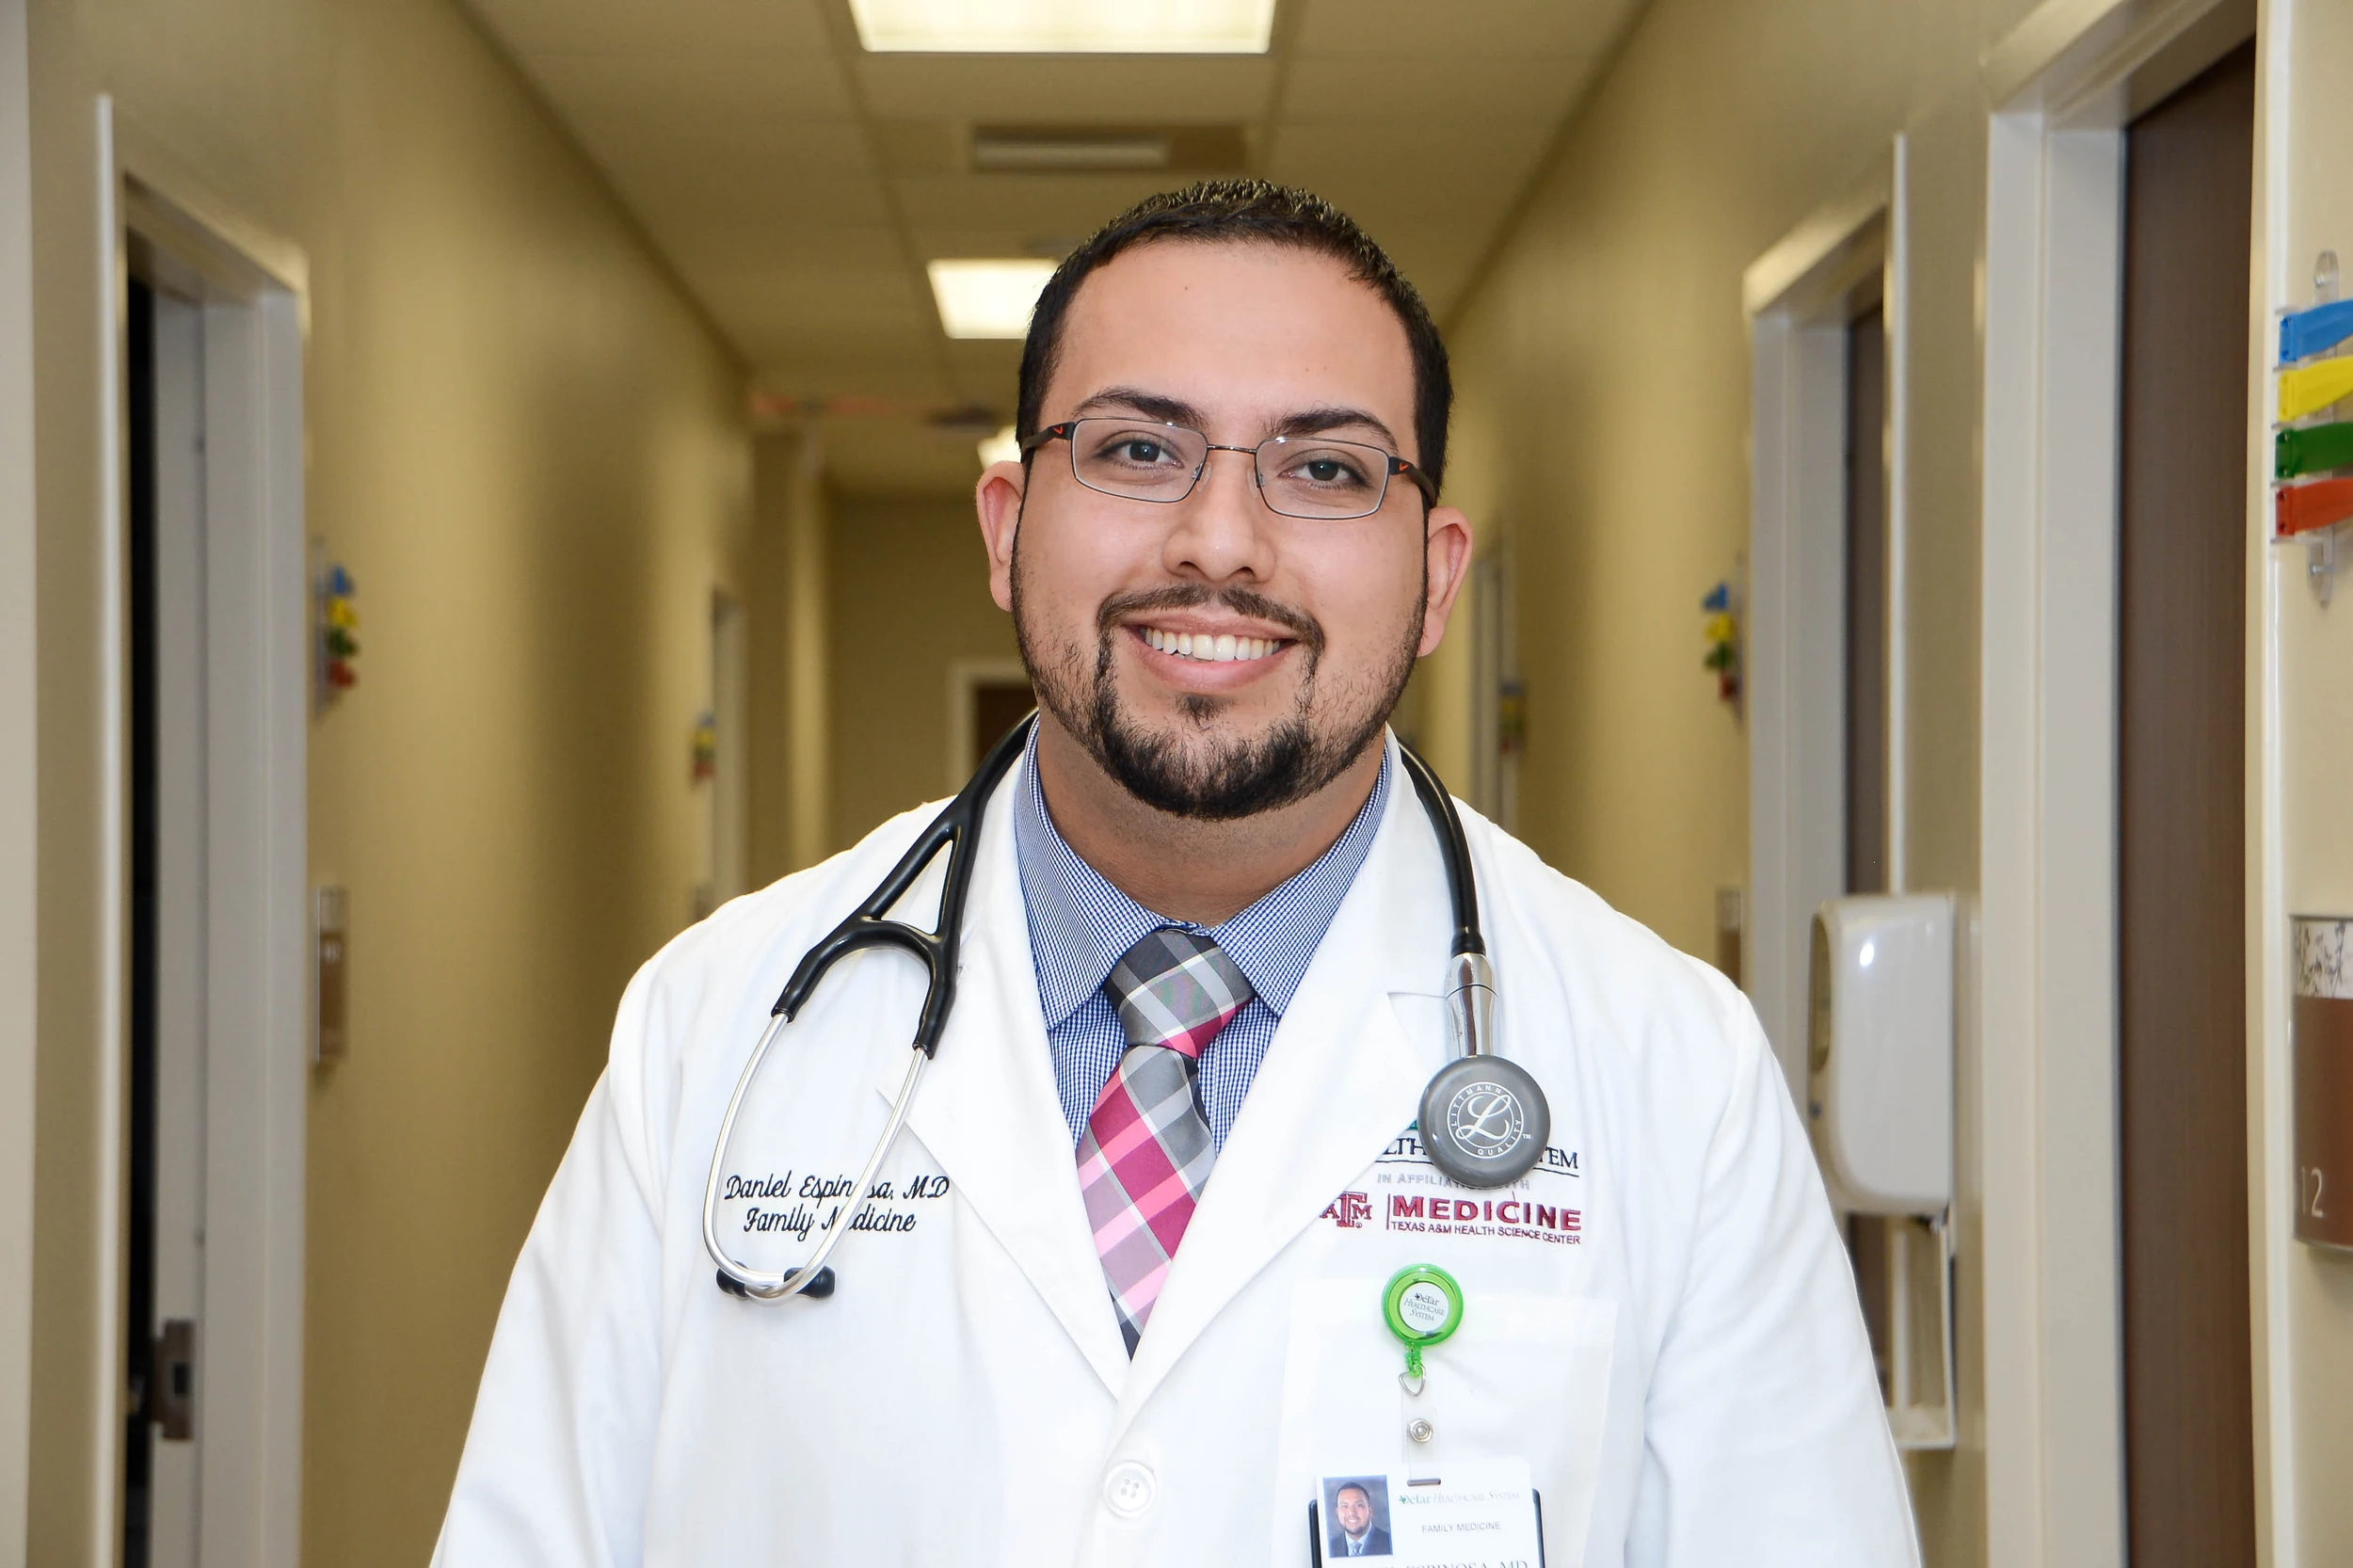 Meet Dr. Daniel Espinosa